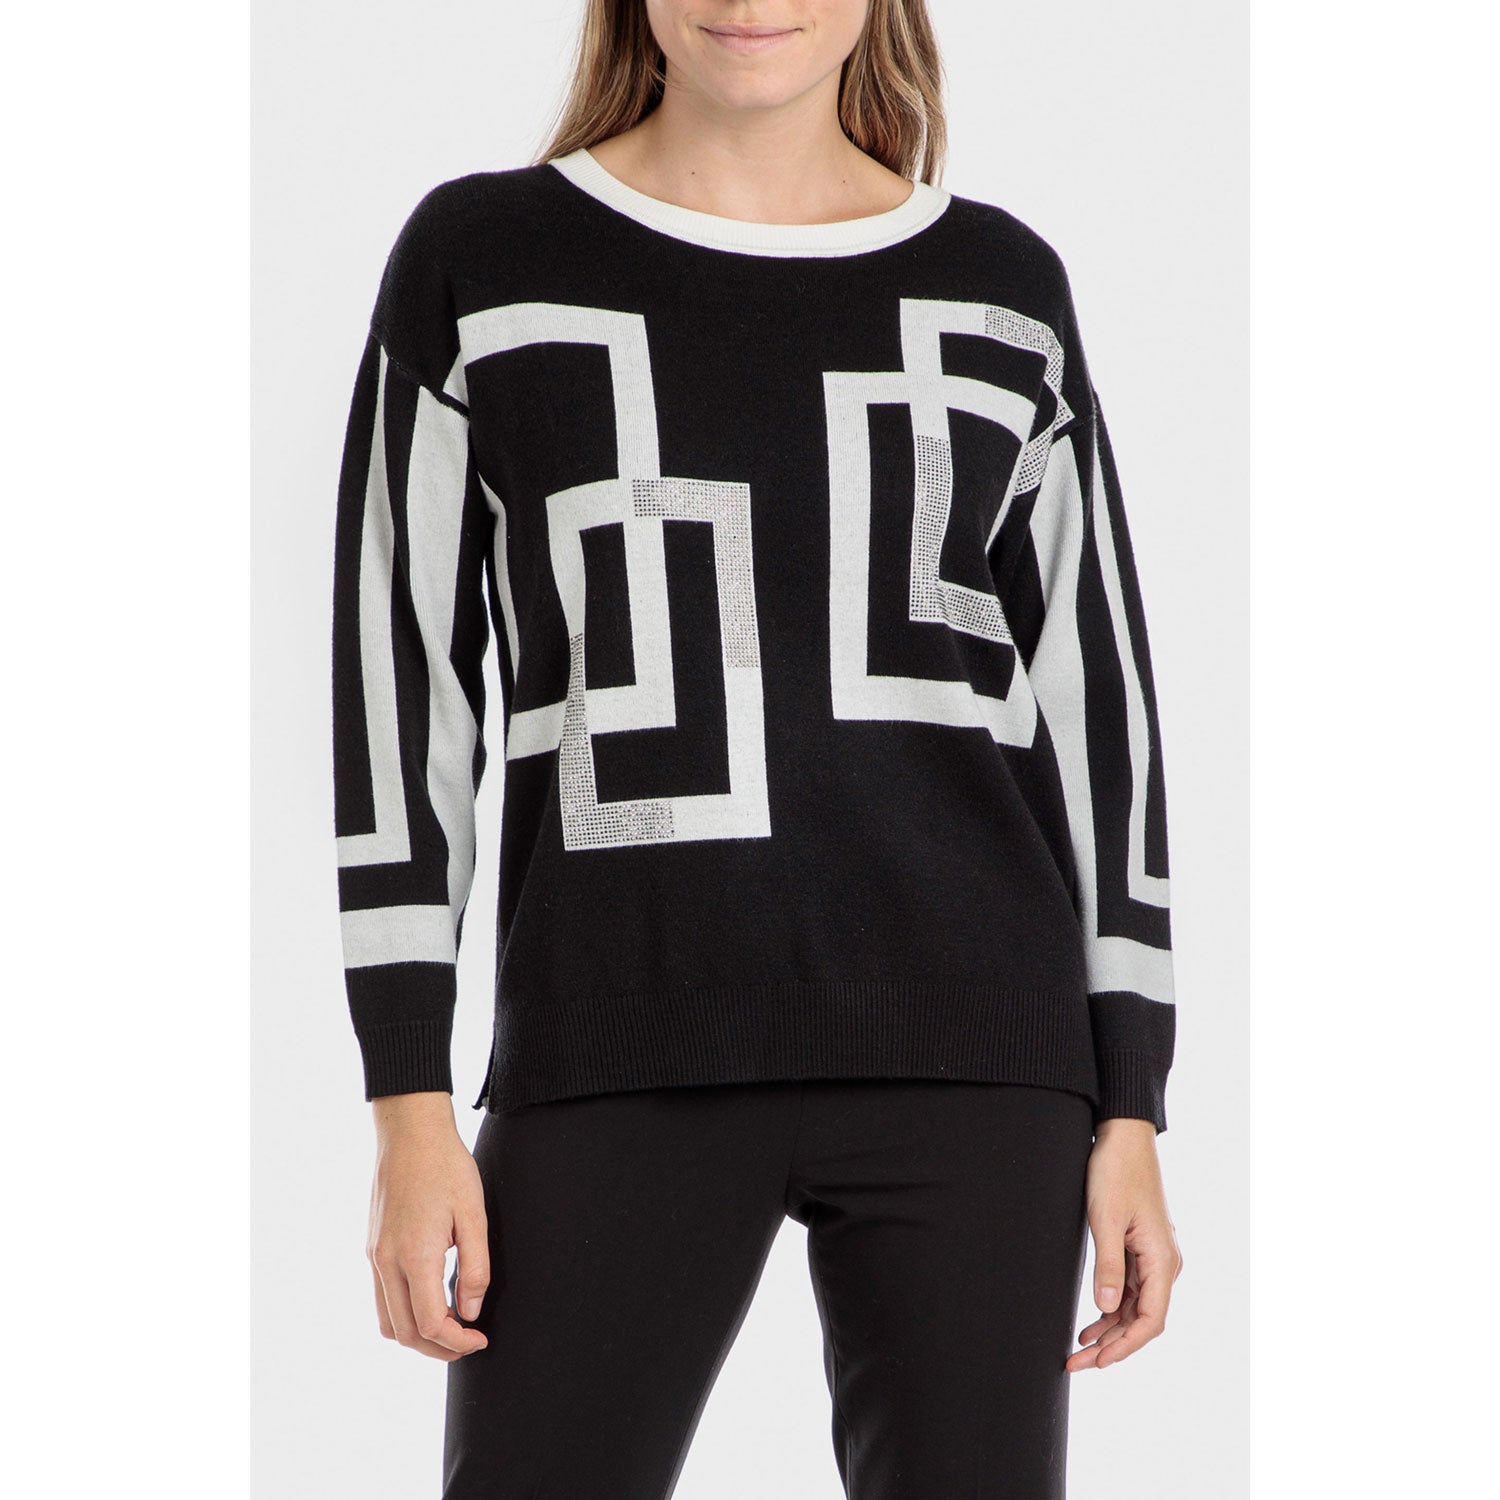 Punt Roma Jacquard Sweater - Black 1 Shaws Department Stores